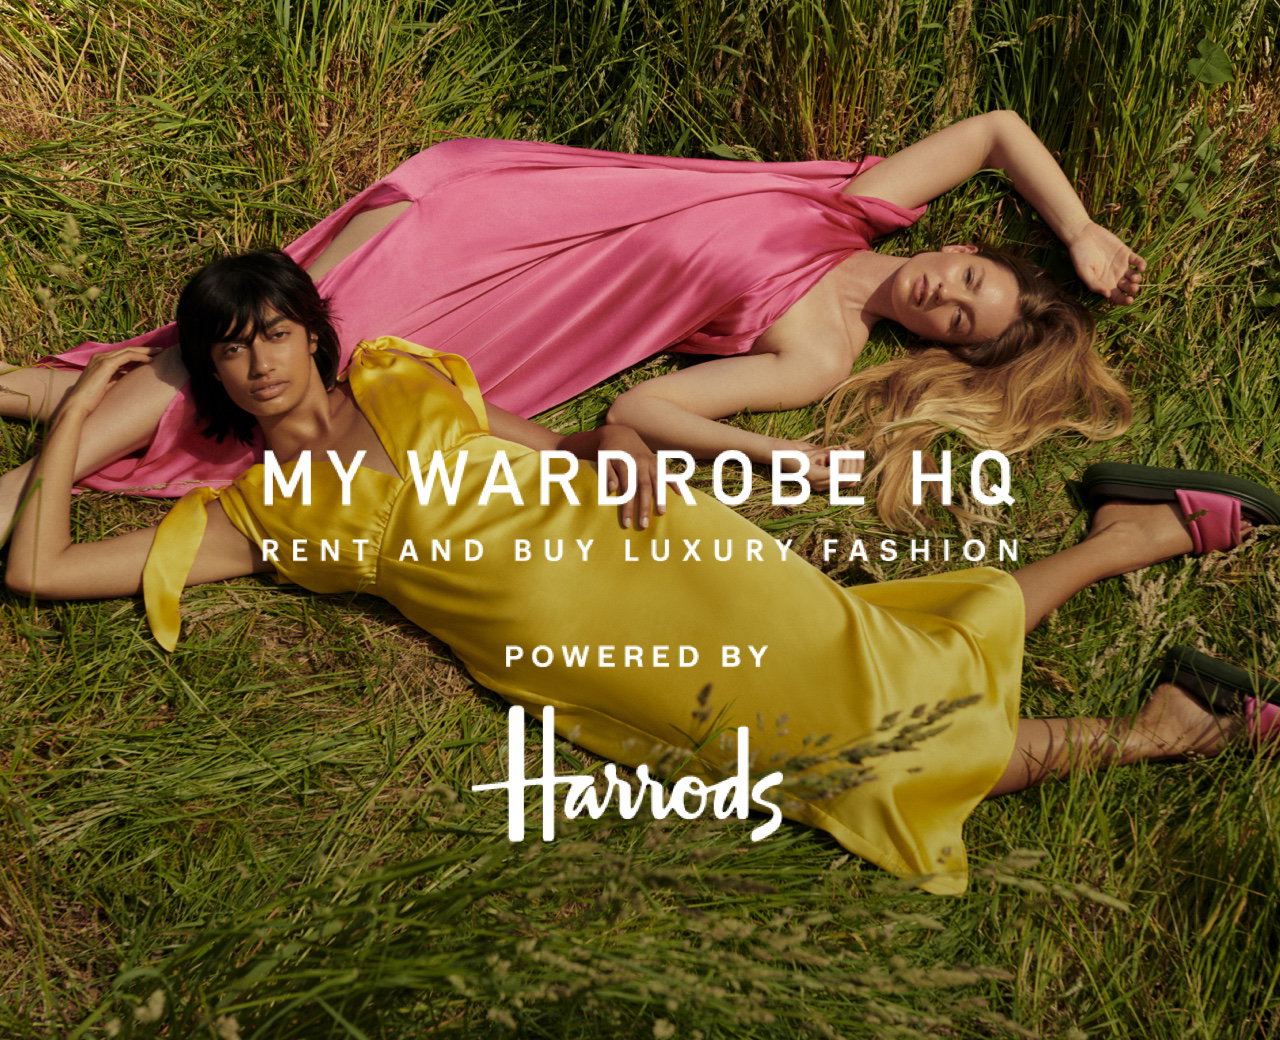 Harrods: Louis Vuitton and Schiaparelli lead our headline fashion moments